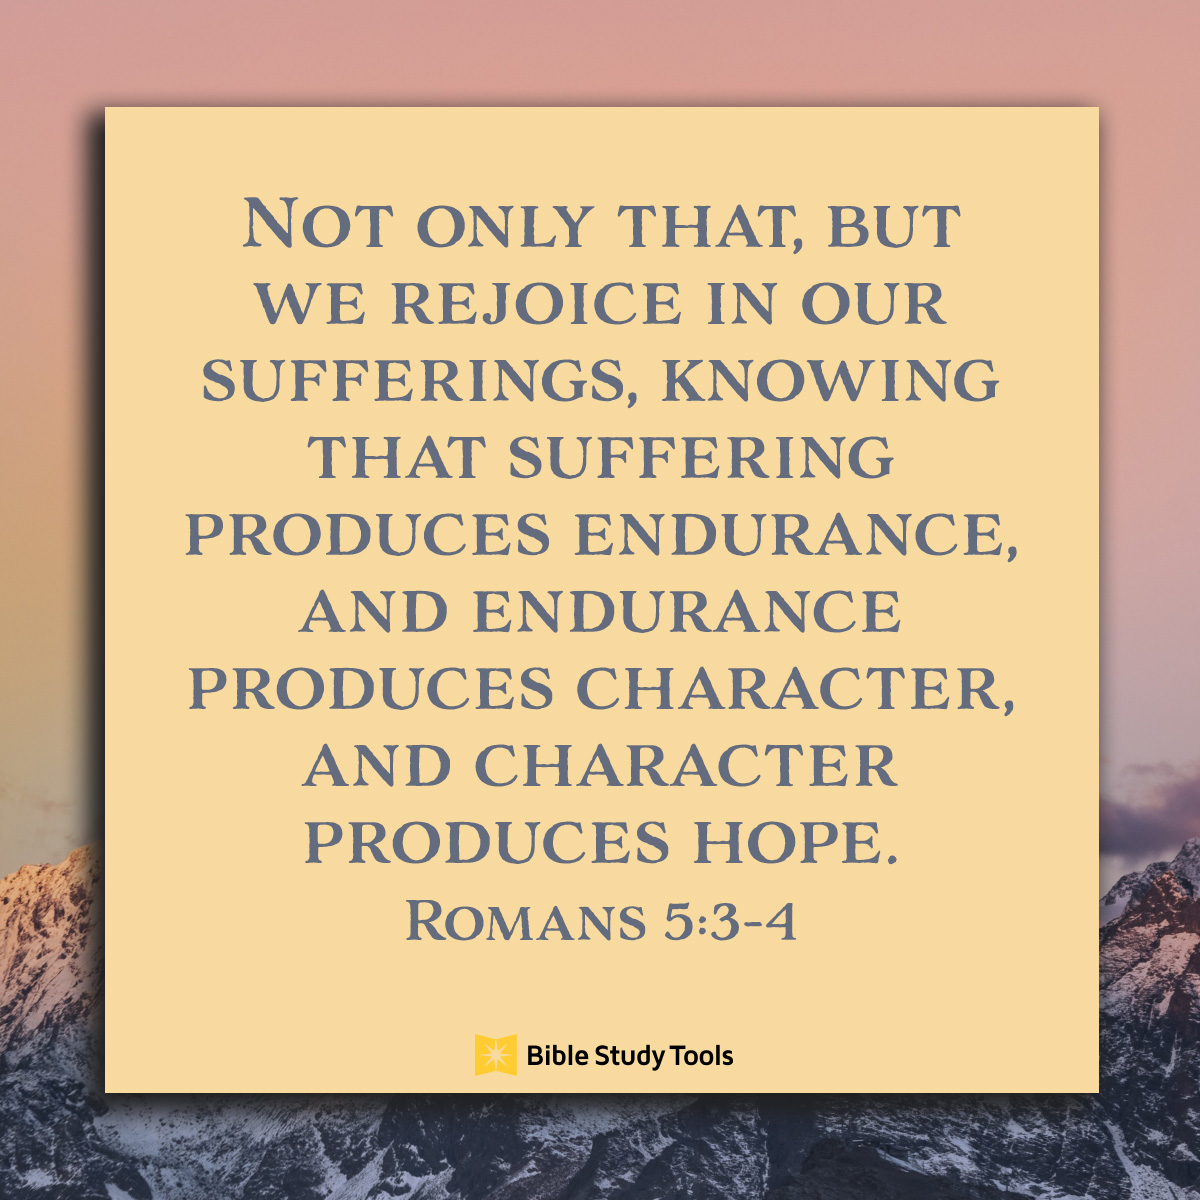 Romans 5:3-4, inspirational image